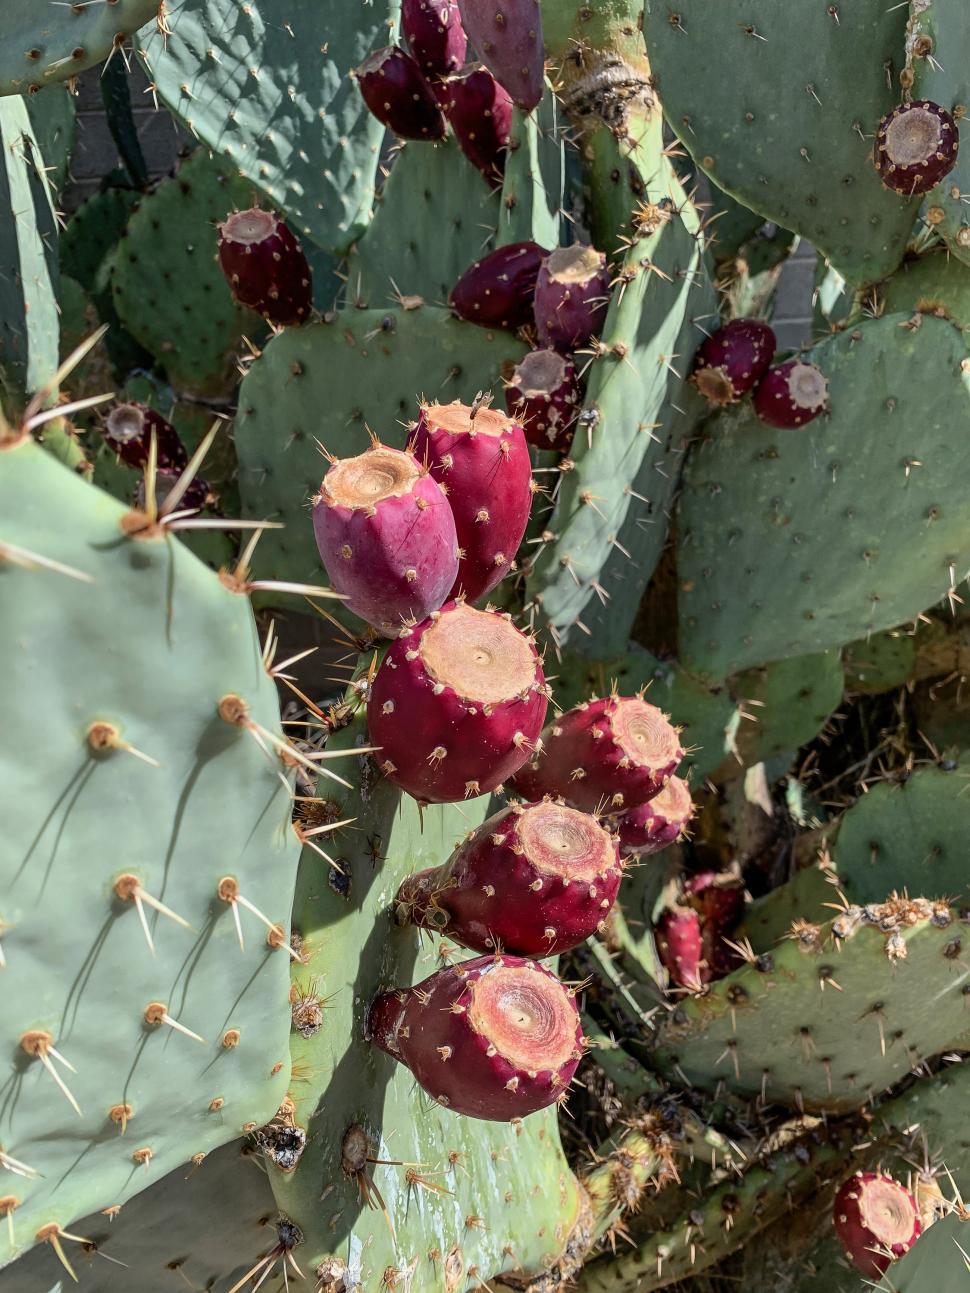 Free Image of Ripe prickly pear cactus fruit 